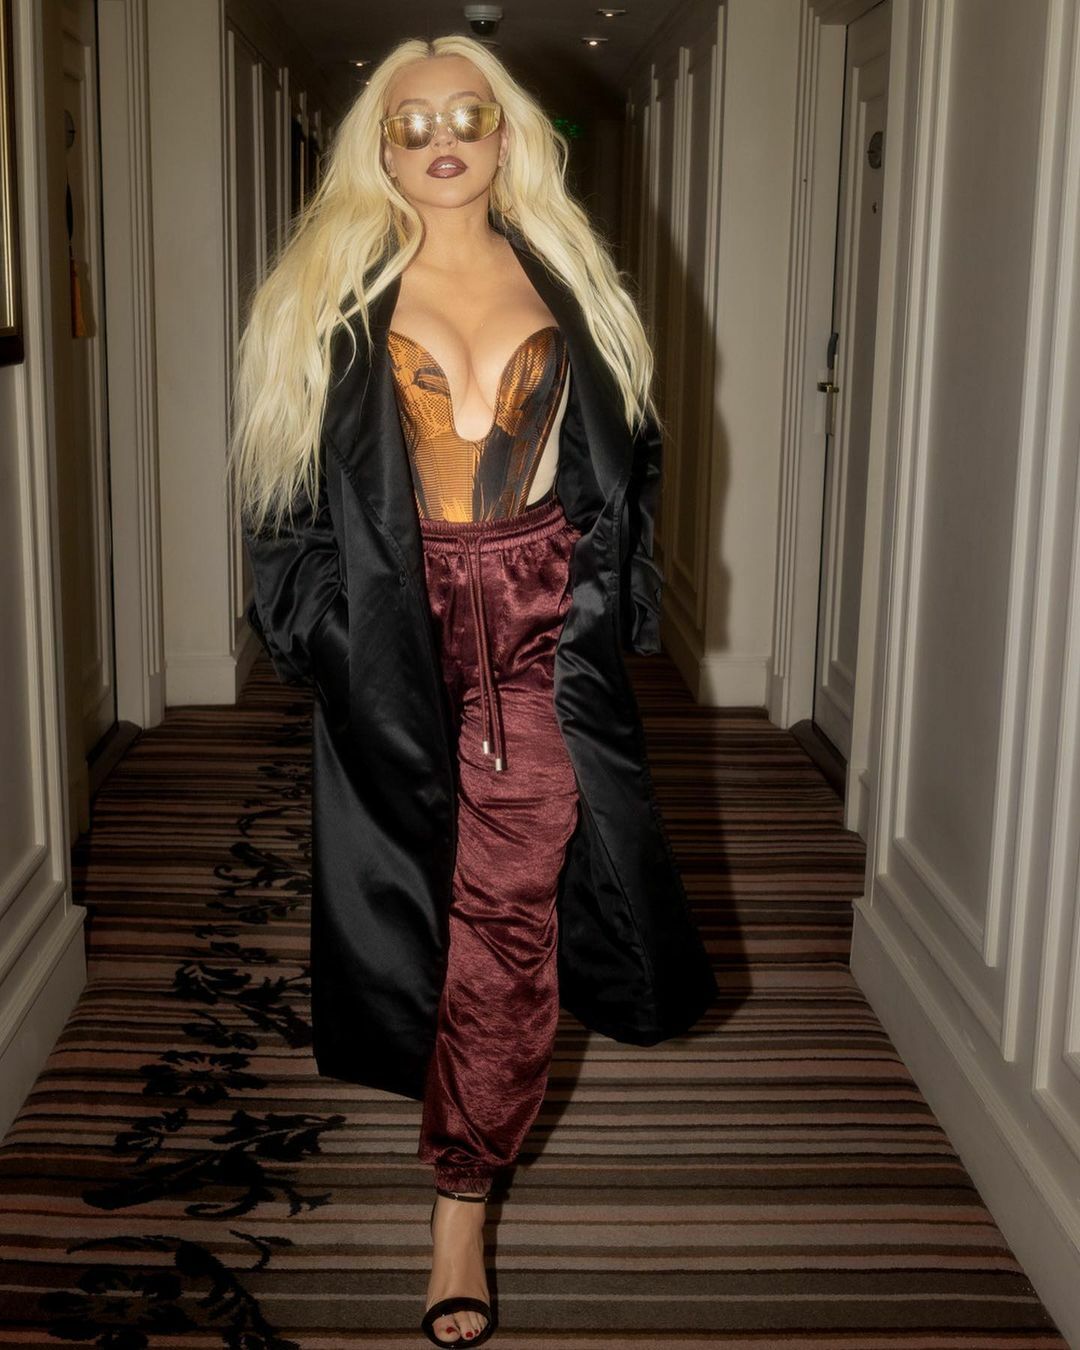 Fotos n°18 : Christina Aguilera hace Las Vegas!